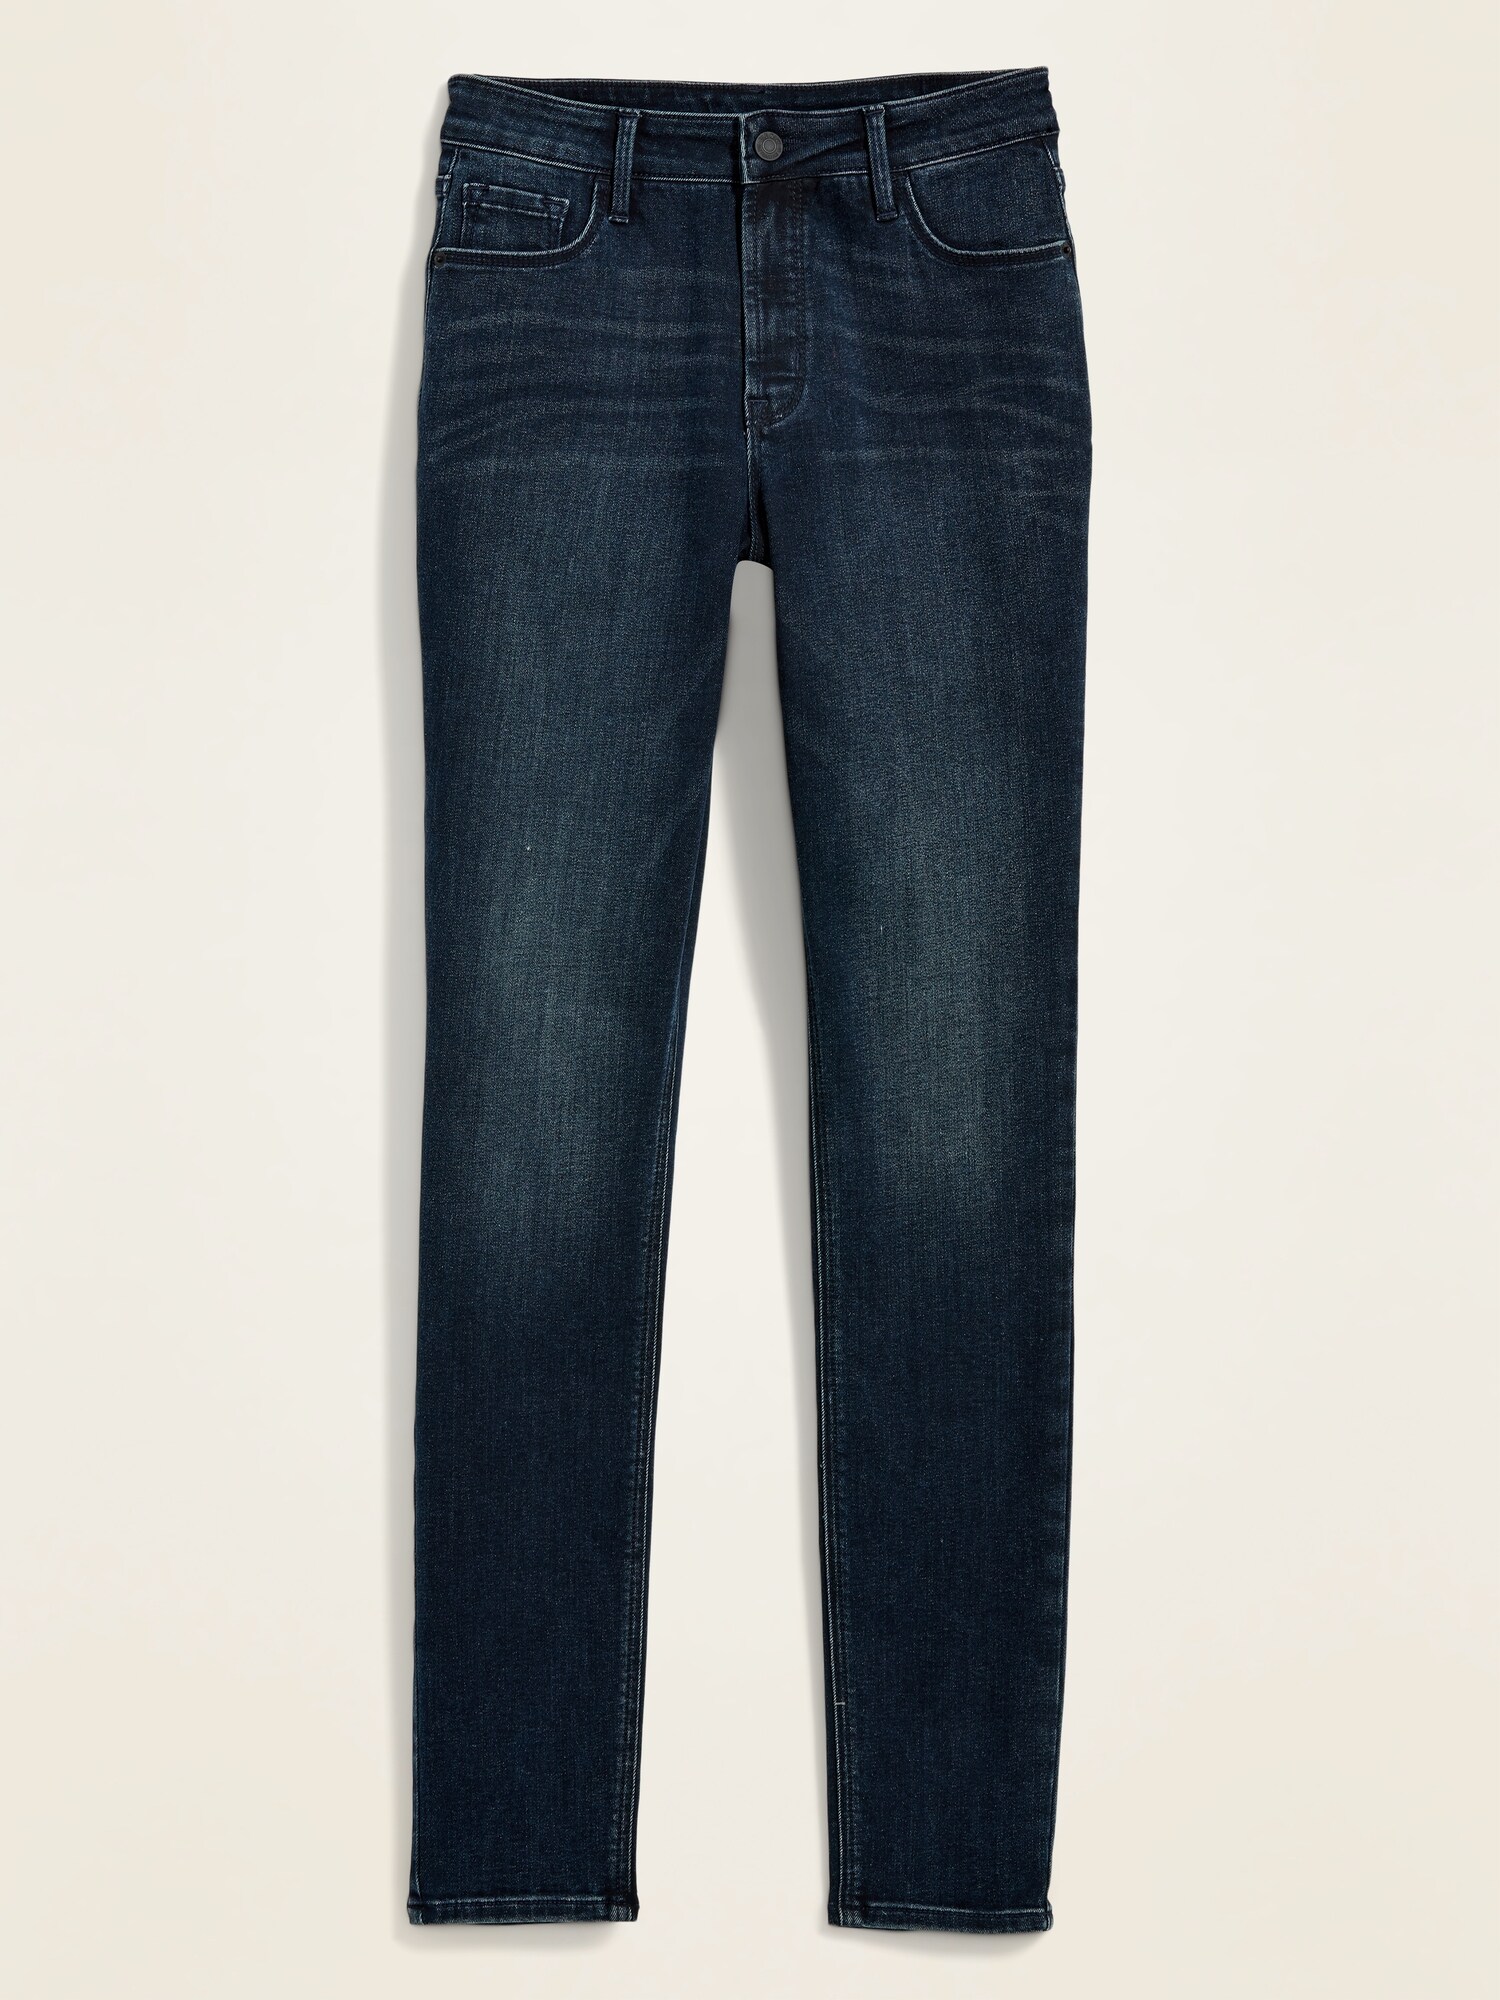 Buy Women Blue Regular Fit Dark Wash Jeans Online - 711190 | Allen Solly-lmd.edu.vn